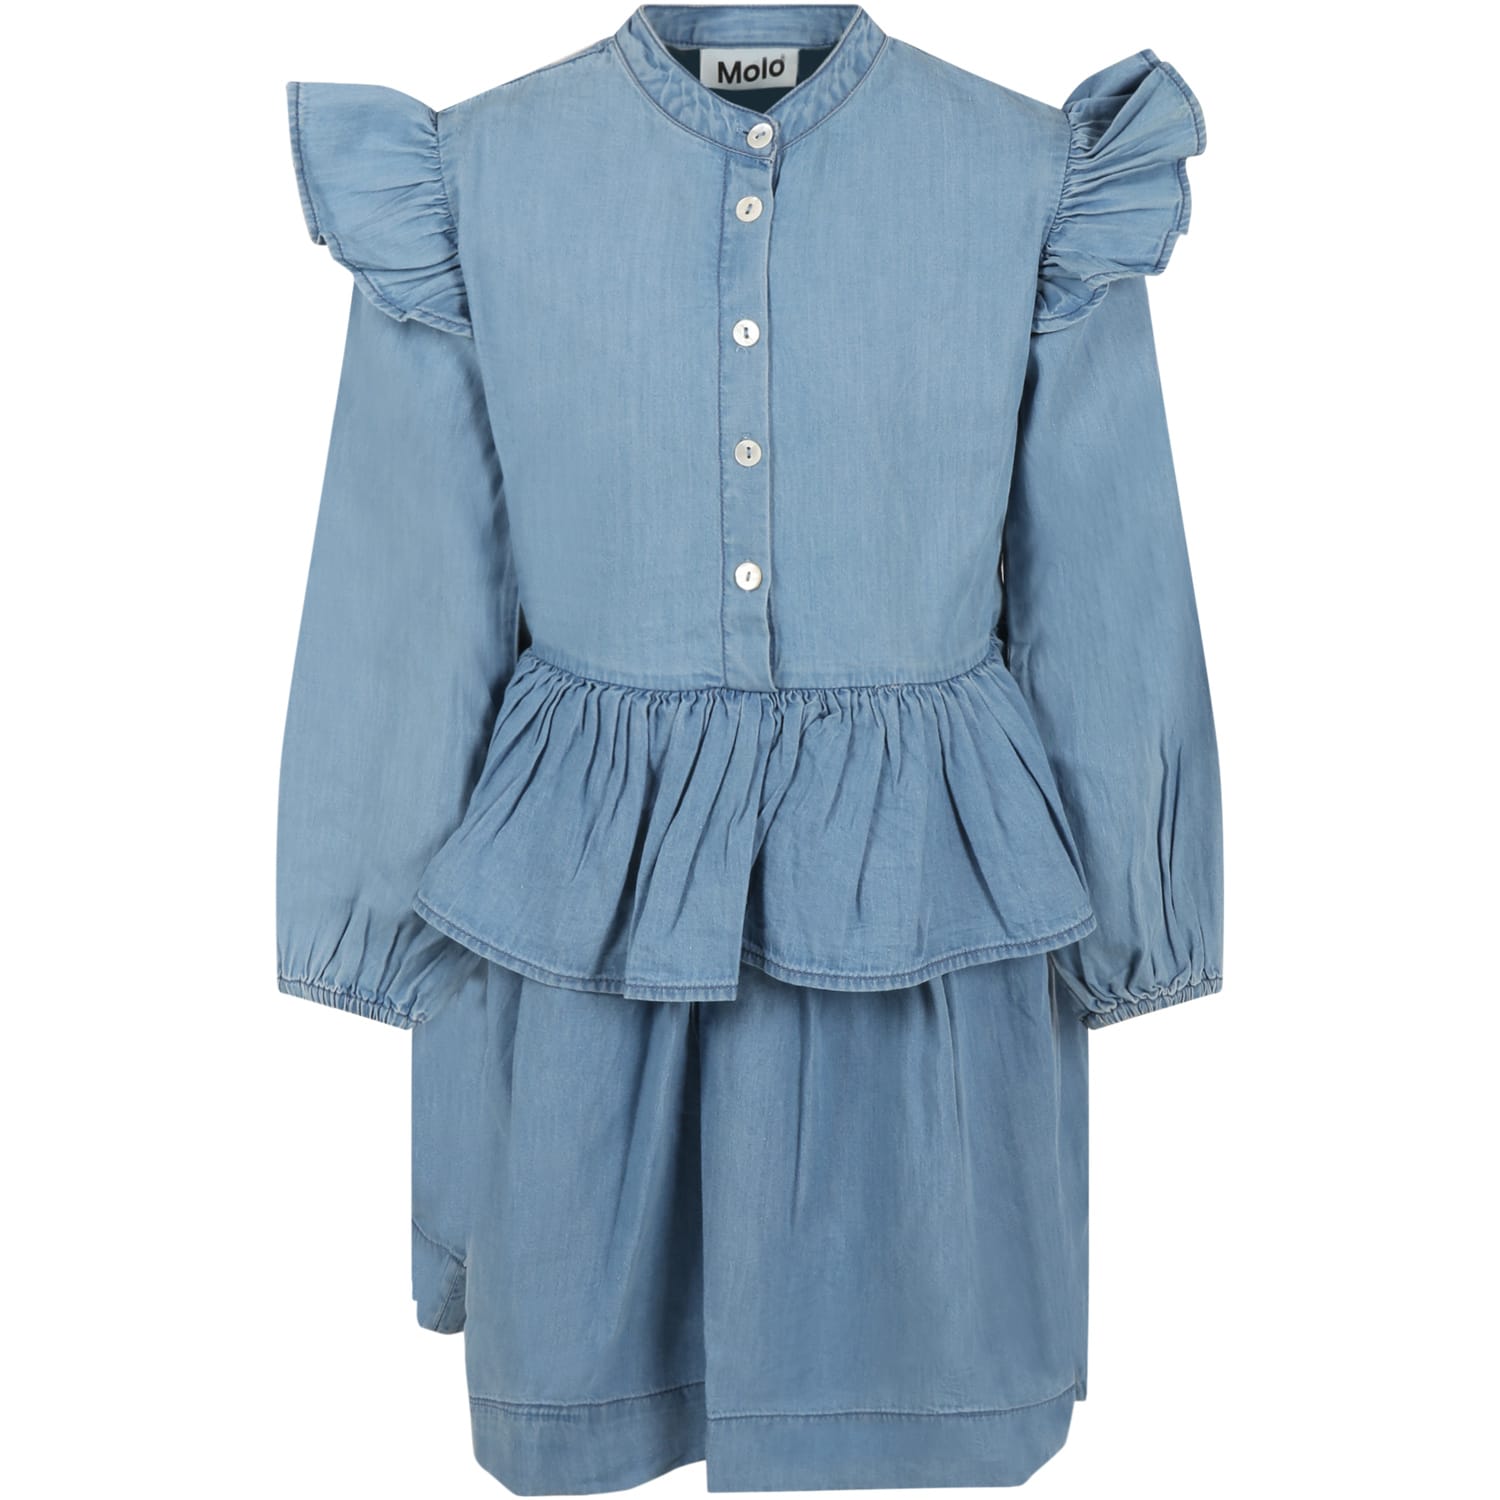 Molo Light-blue Dress Denim For Girl With Ruffles